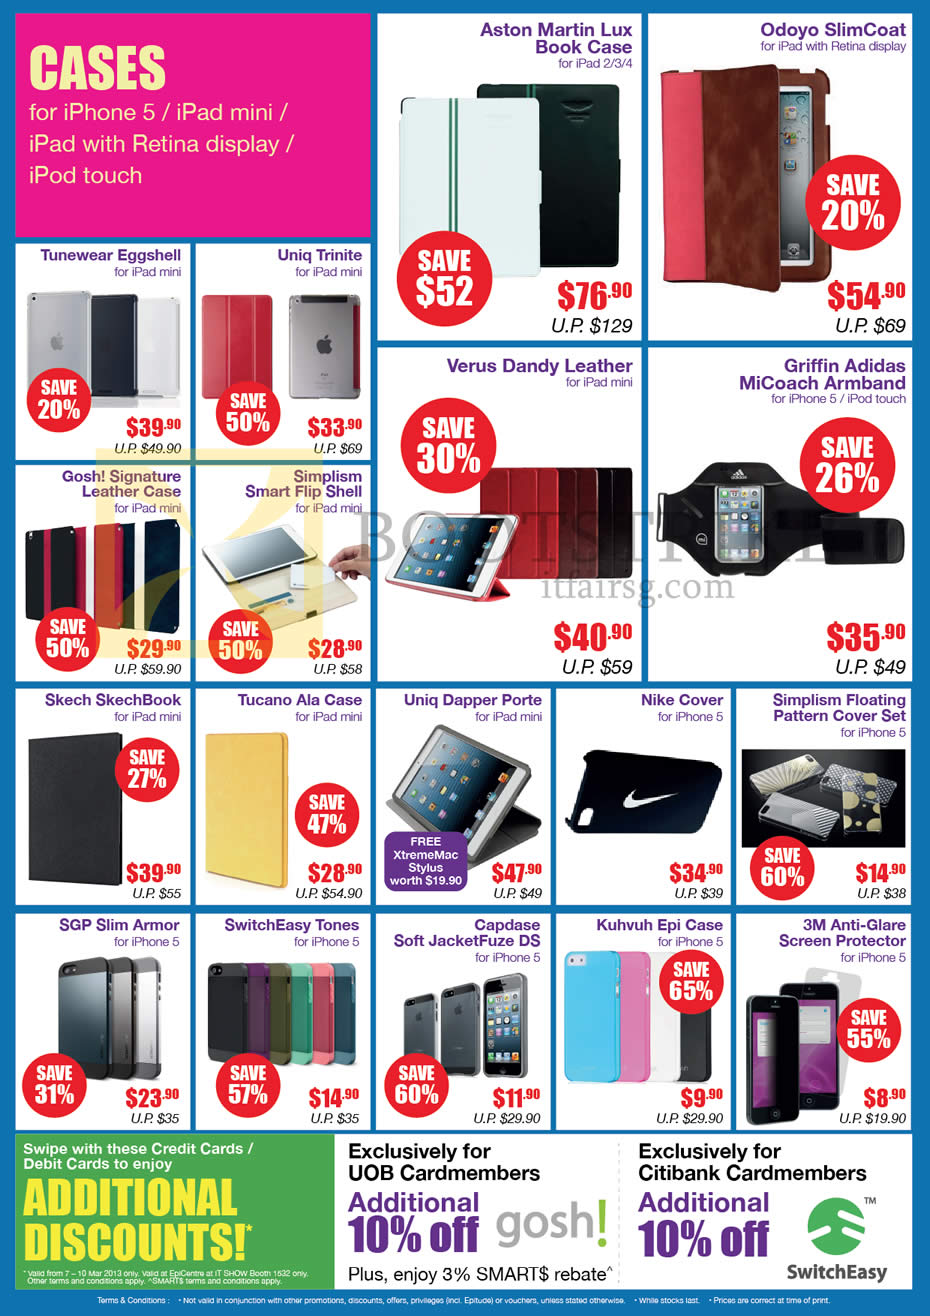 IT SHOW 2013 price list image brochure of EpiCentre Cases IPhone IPod IPad, Aston Martin, Gosh, Uniq, Nike, Tunewear, SGP